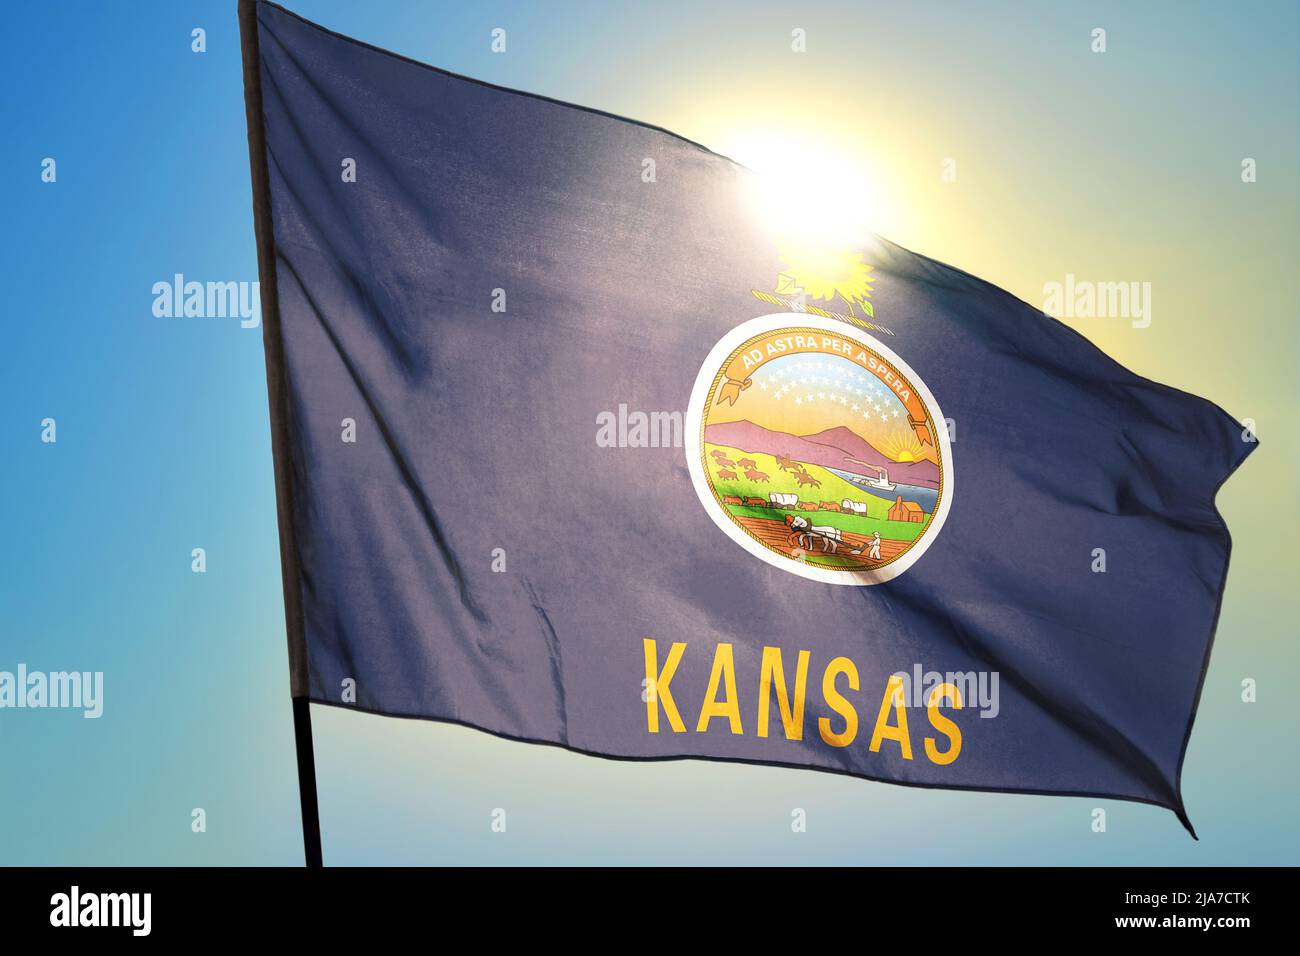 Kansas state of United States flag waving on the wind Stock Photo